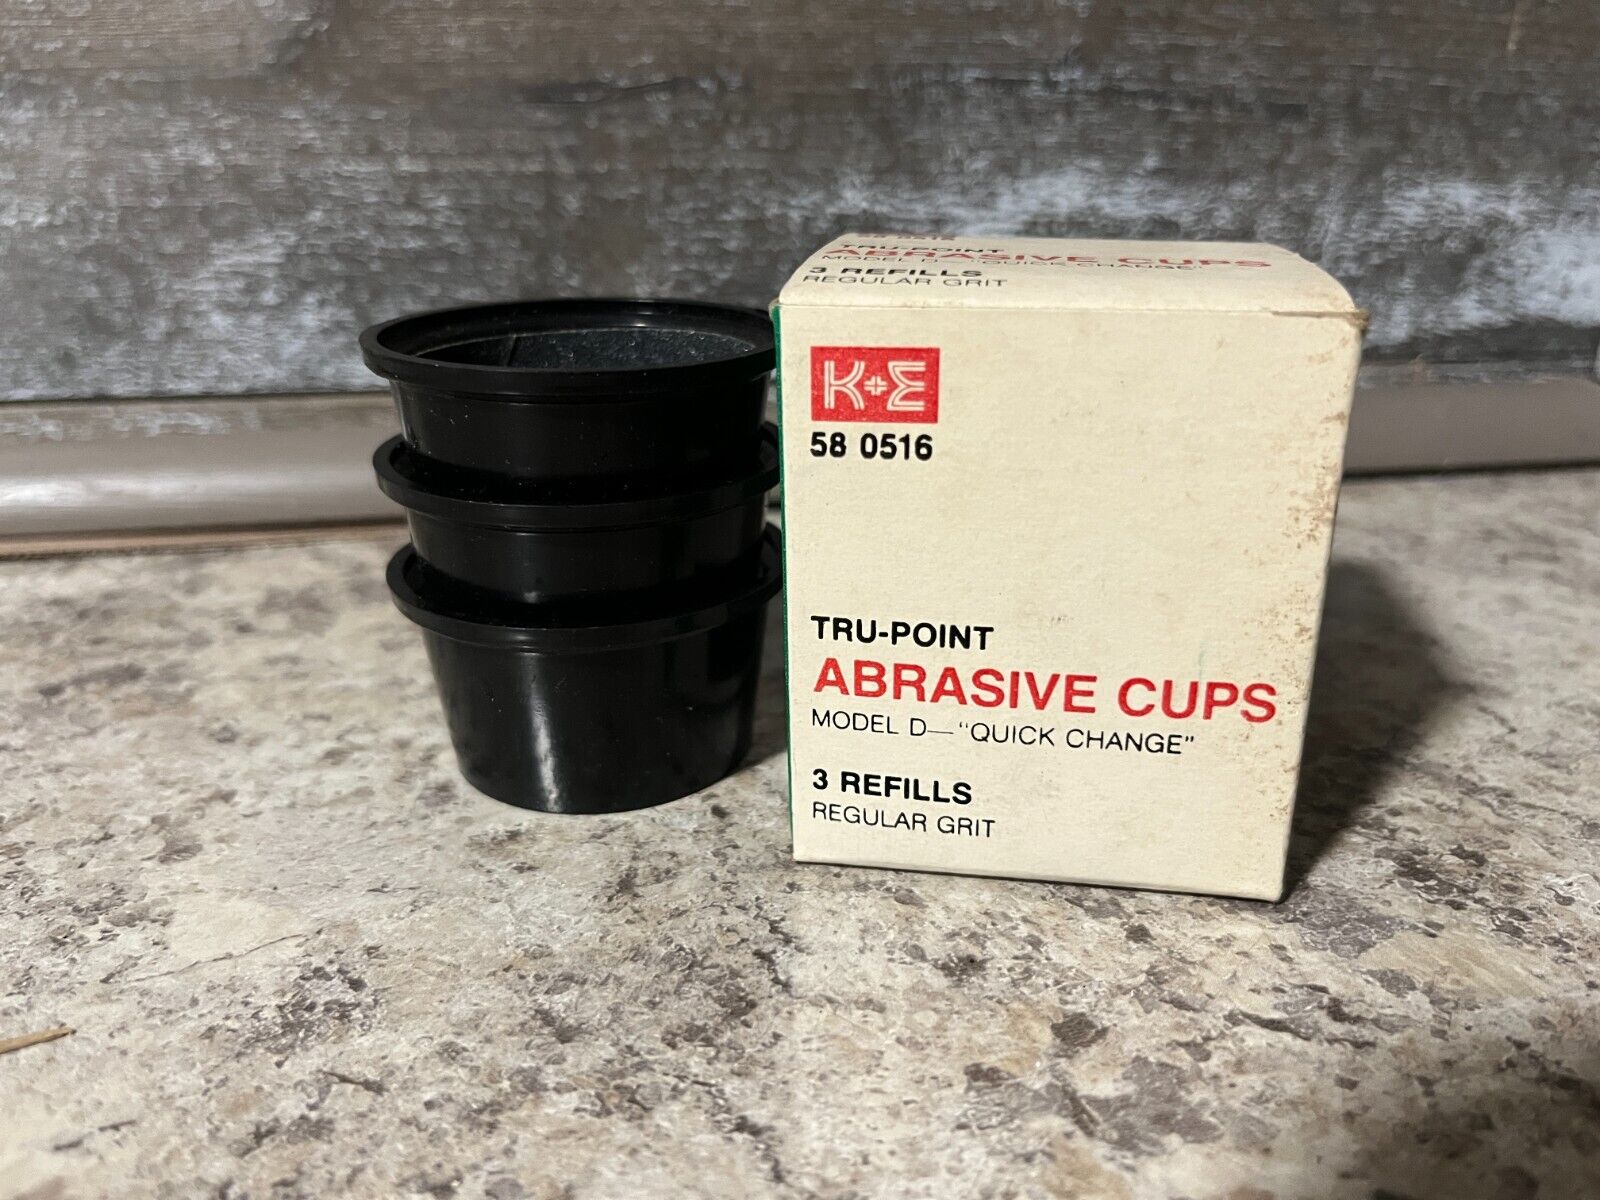 Vintage NOS Tru-Point Lead Pointer Refill (3) Abrasive Cups For Model D